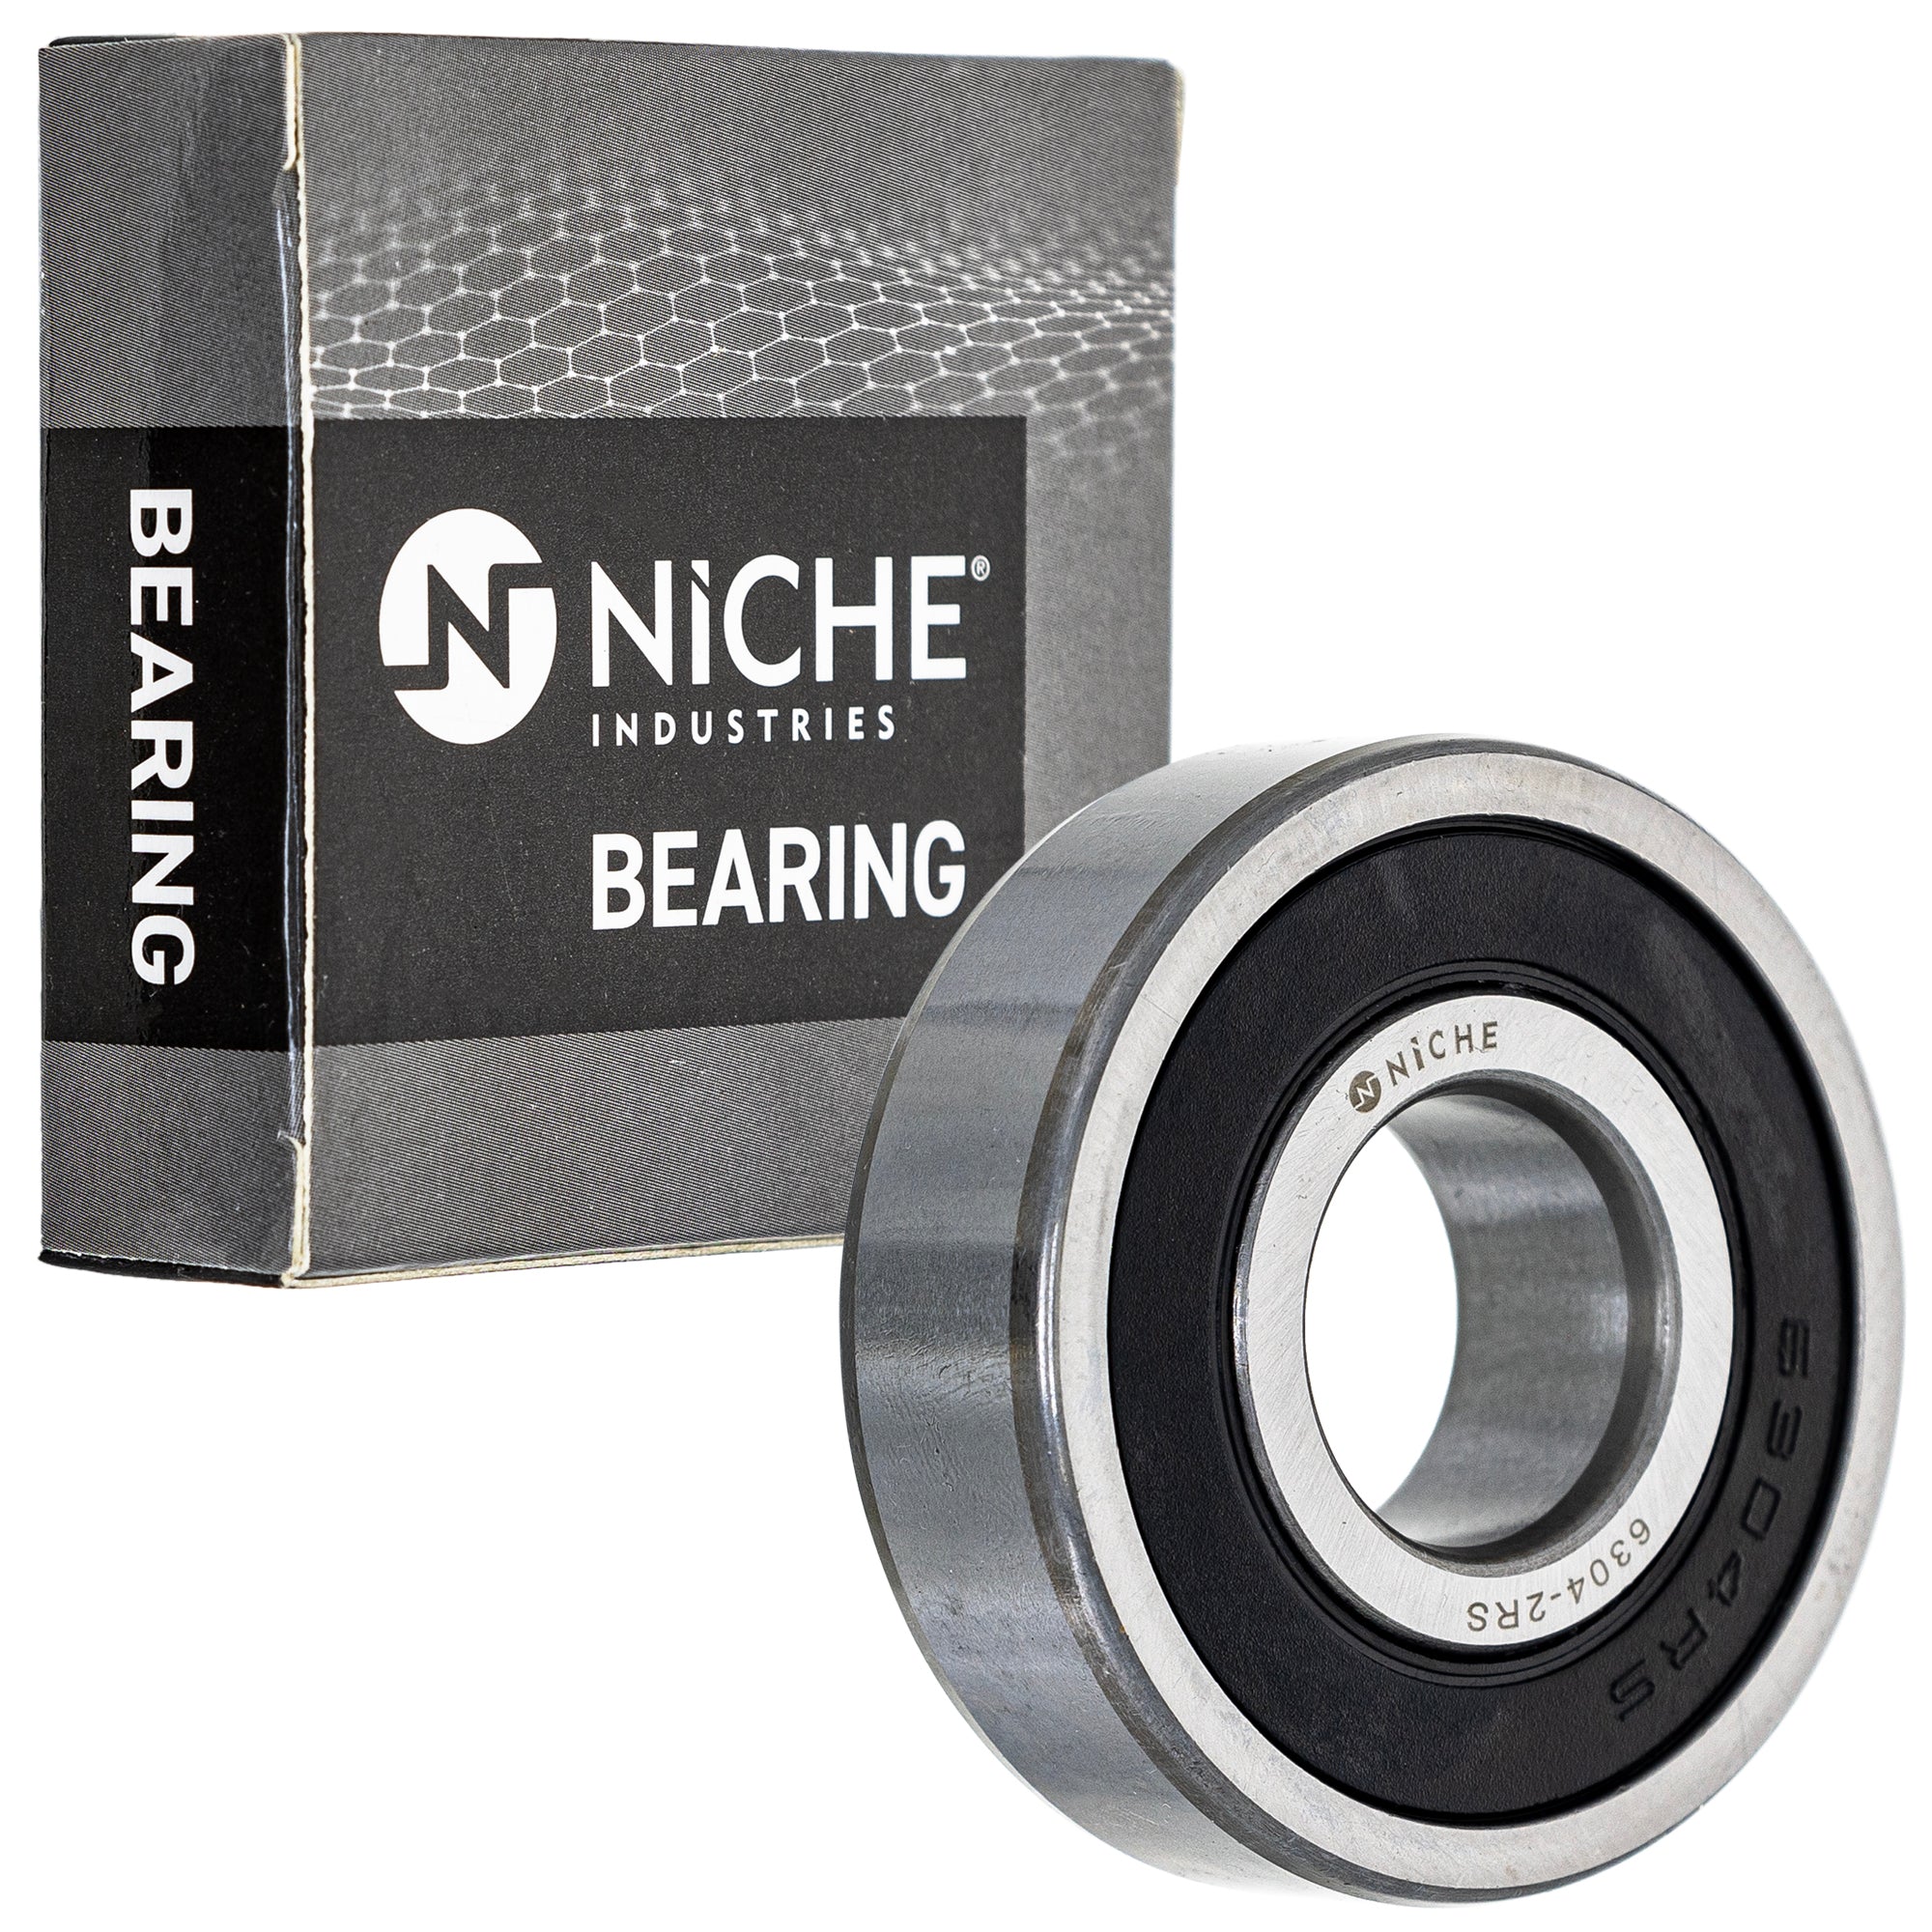 NICHE 519-CBB2244R Bearing 10-Pack for zOTHER VTX1800T3 VTX1800T2